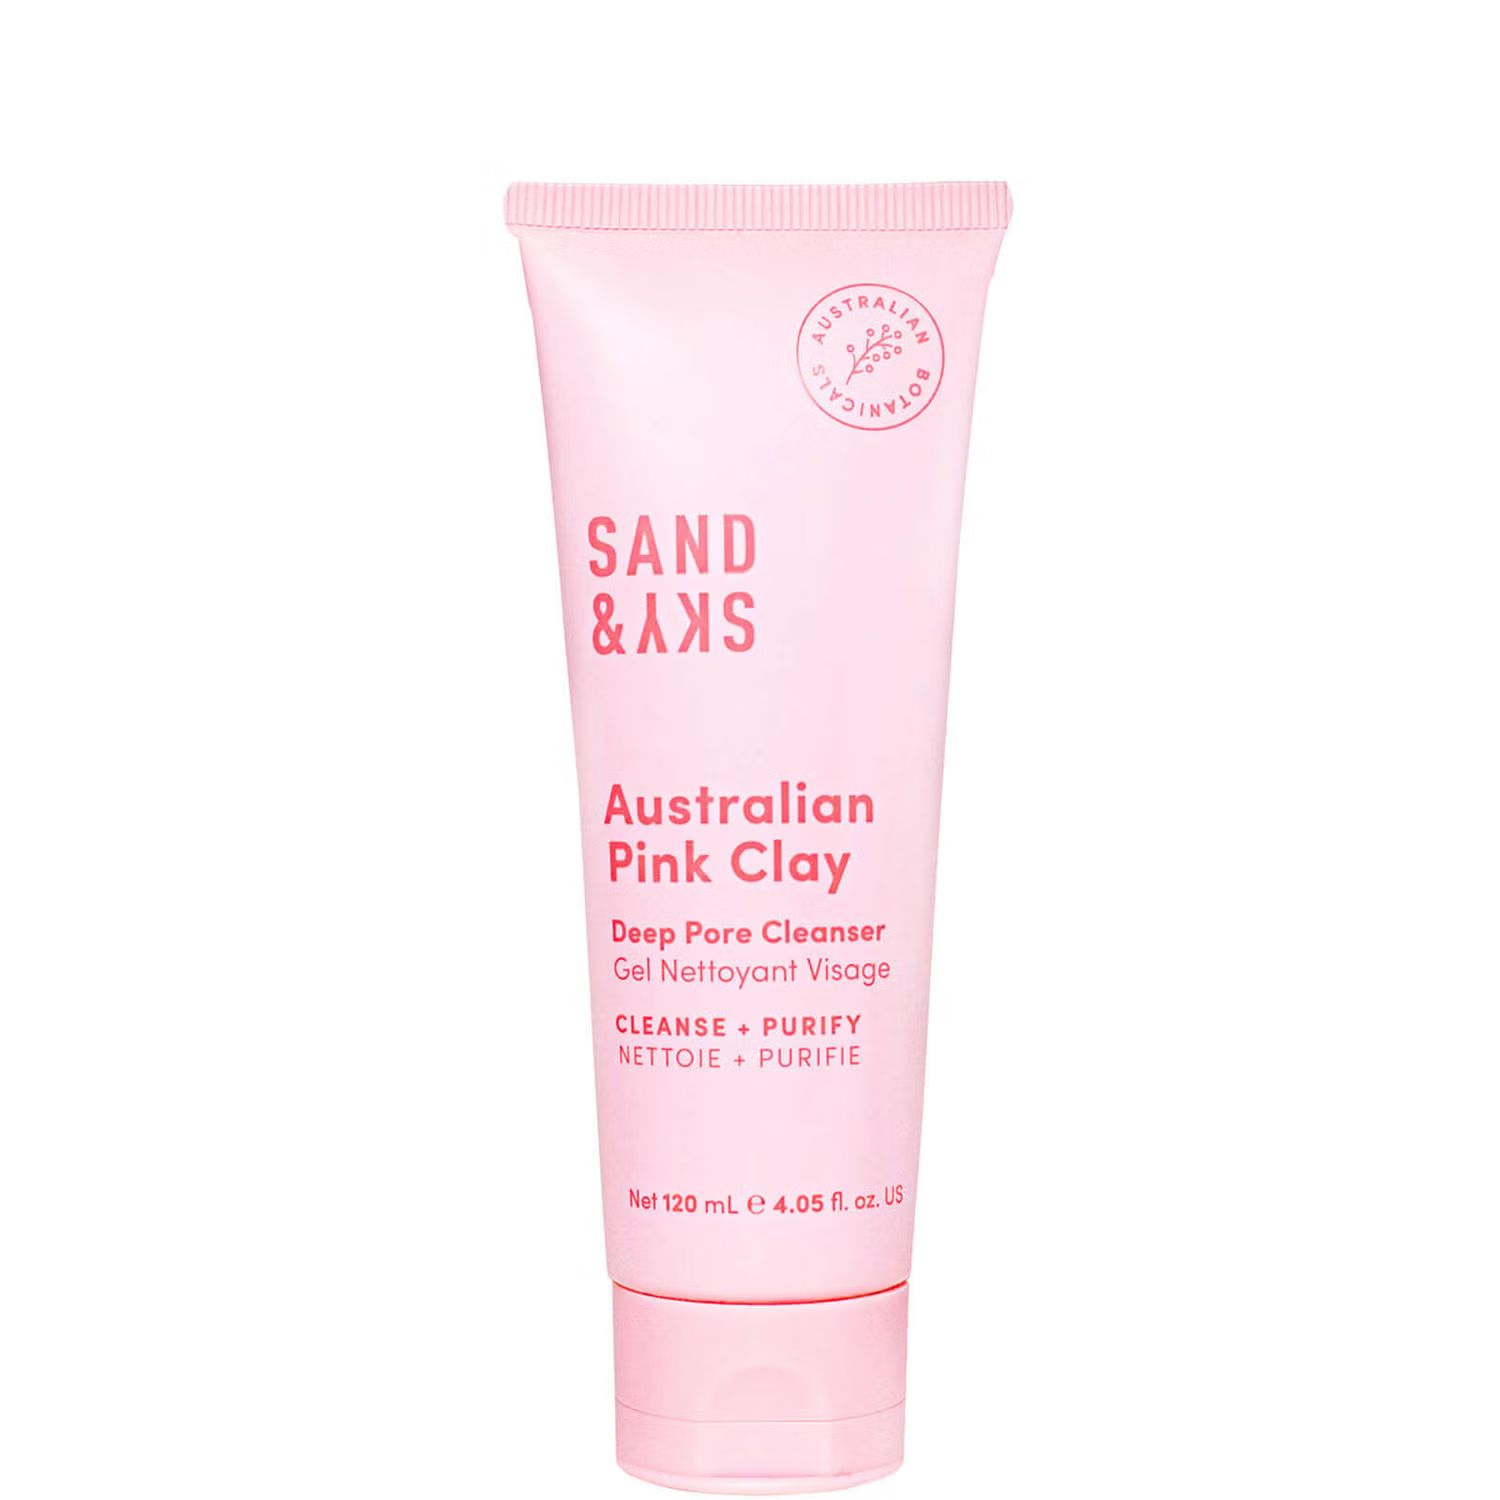 Sand&Sky Australian Pink Clay Deep Pore Cleanser | Cult Beauty (Global)